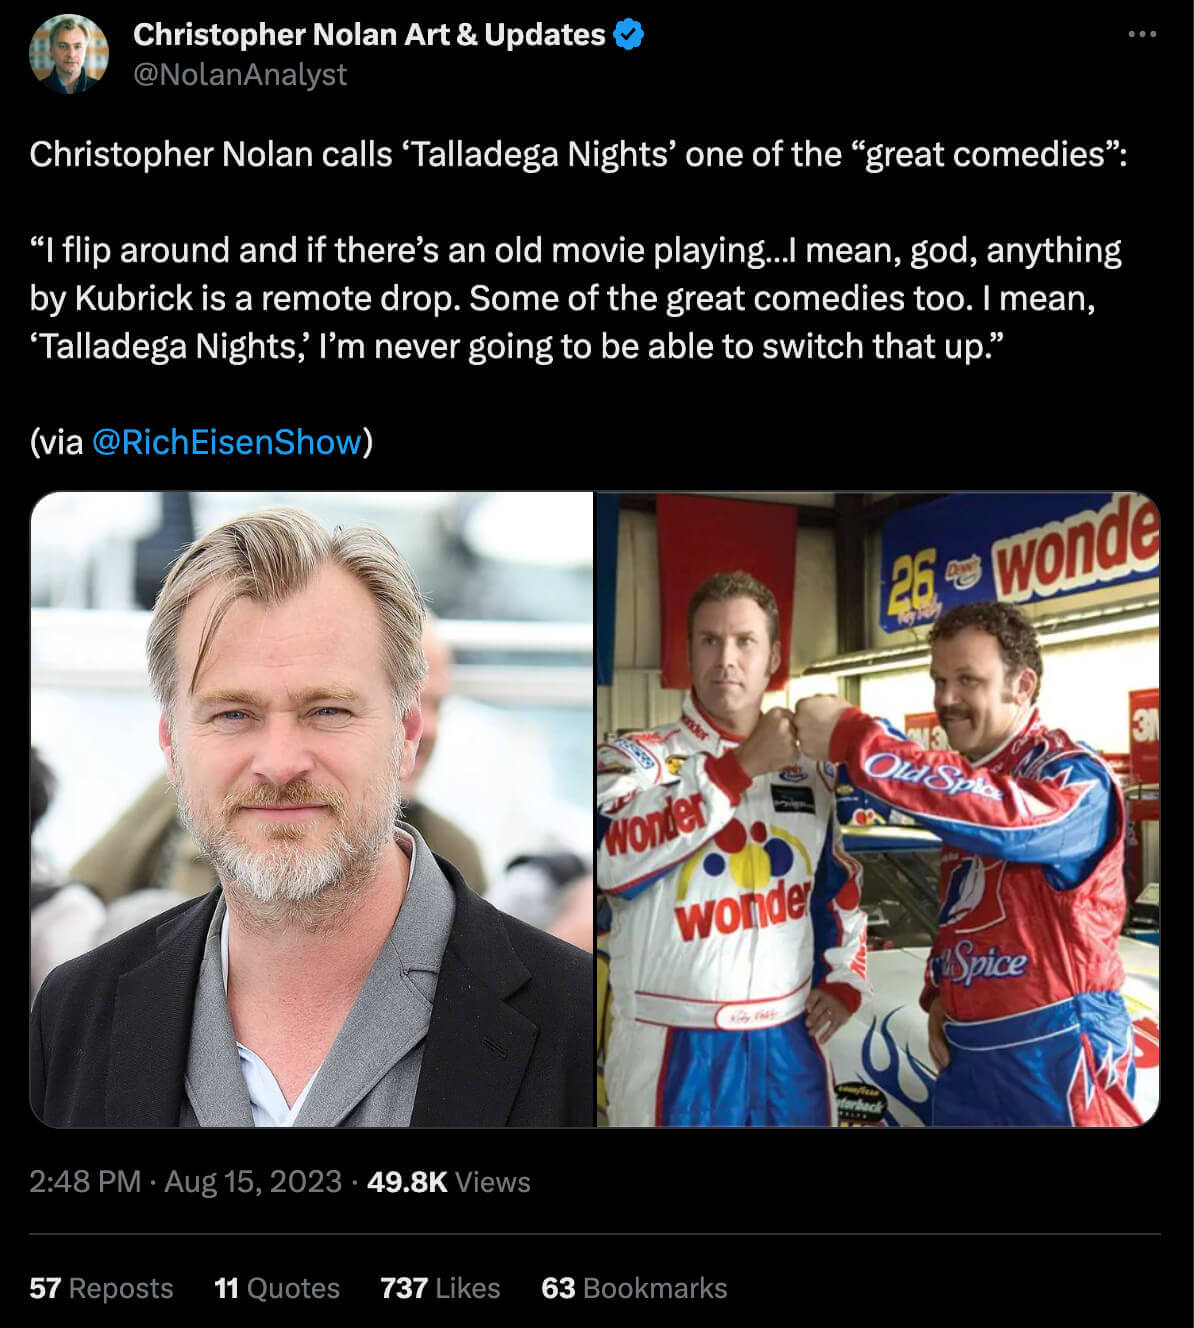 Christopher Nolan sharing his remote drops